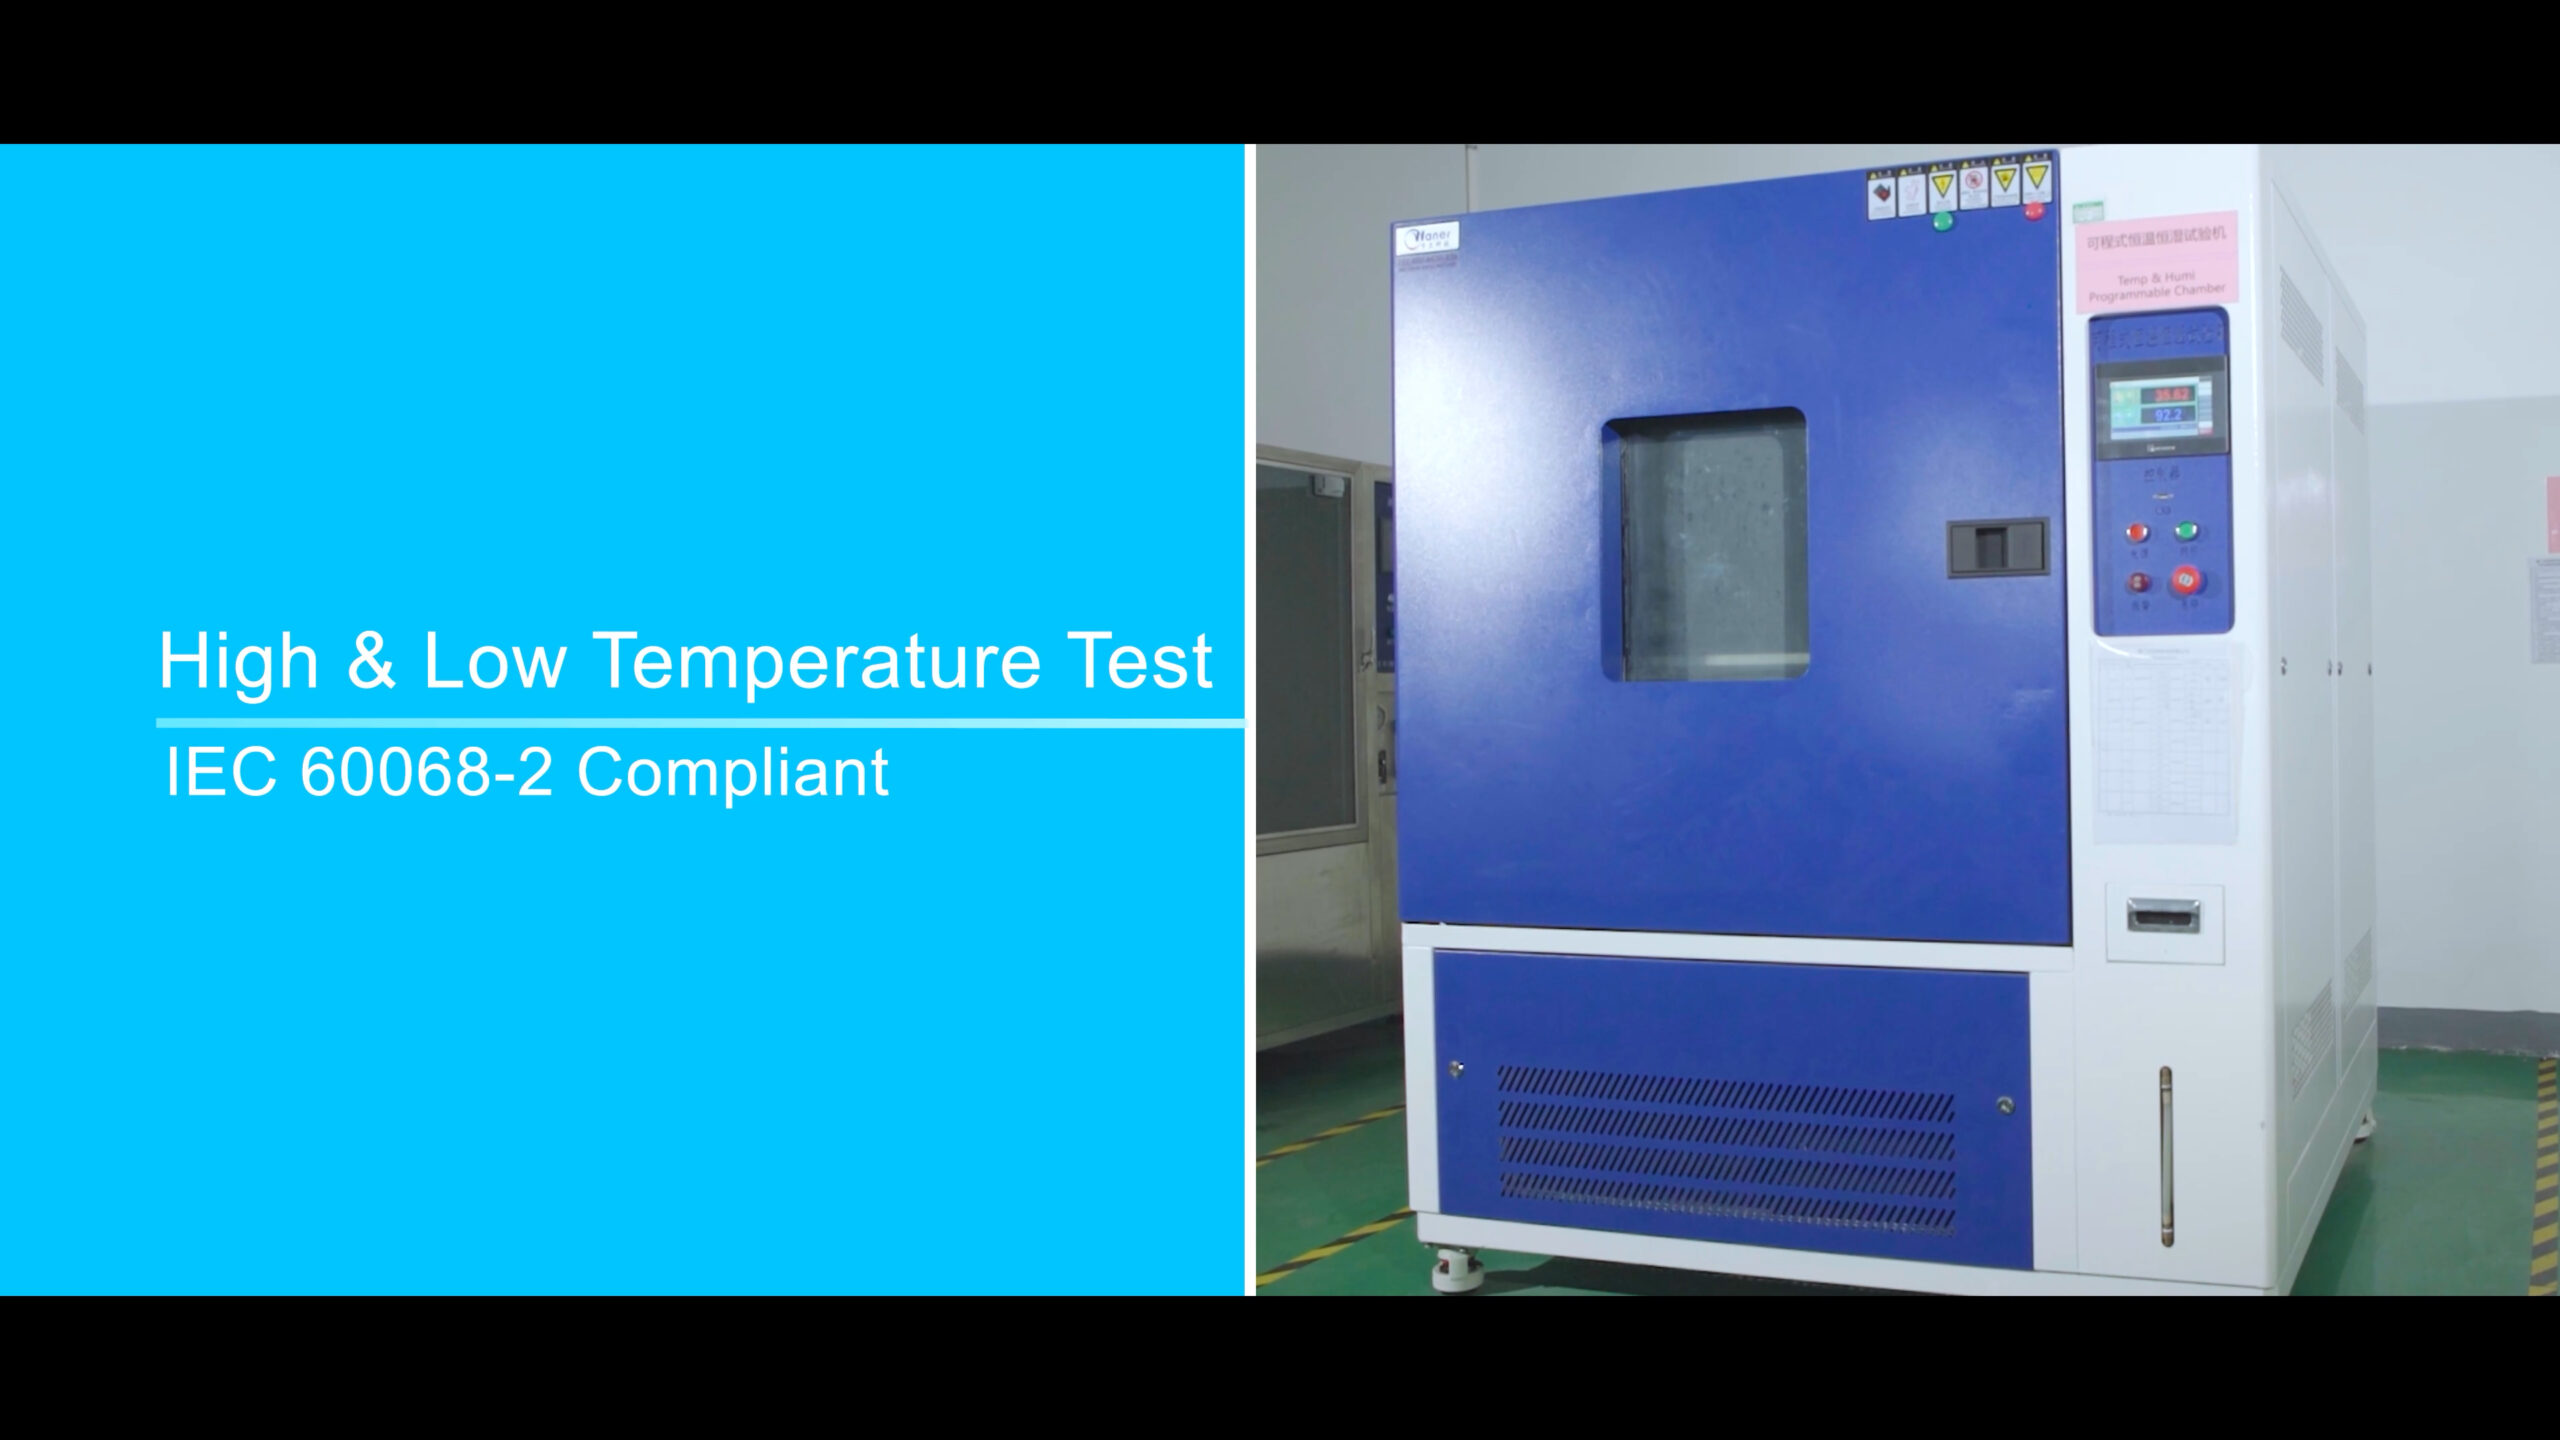 04-High & Low Temperature Test